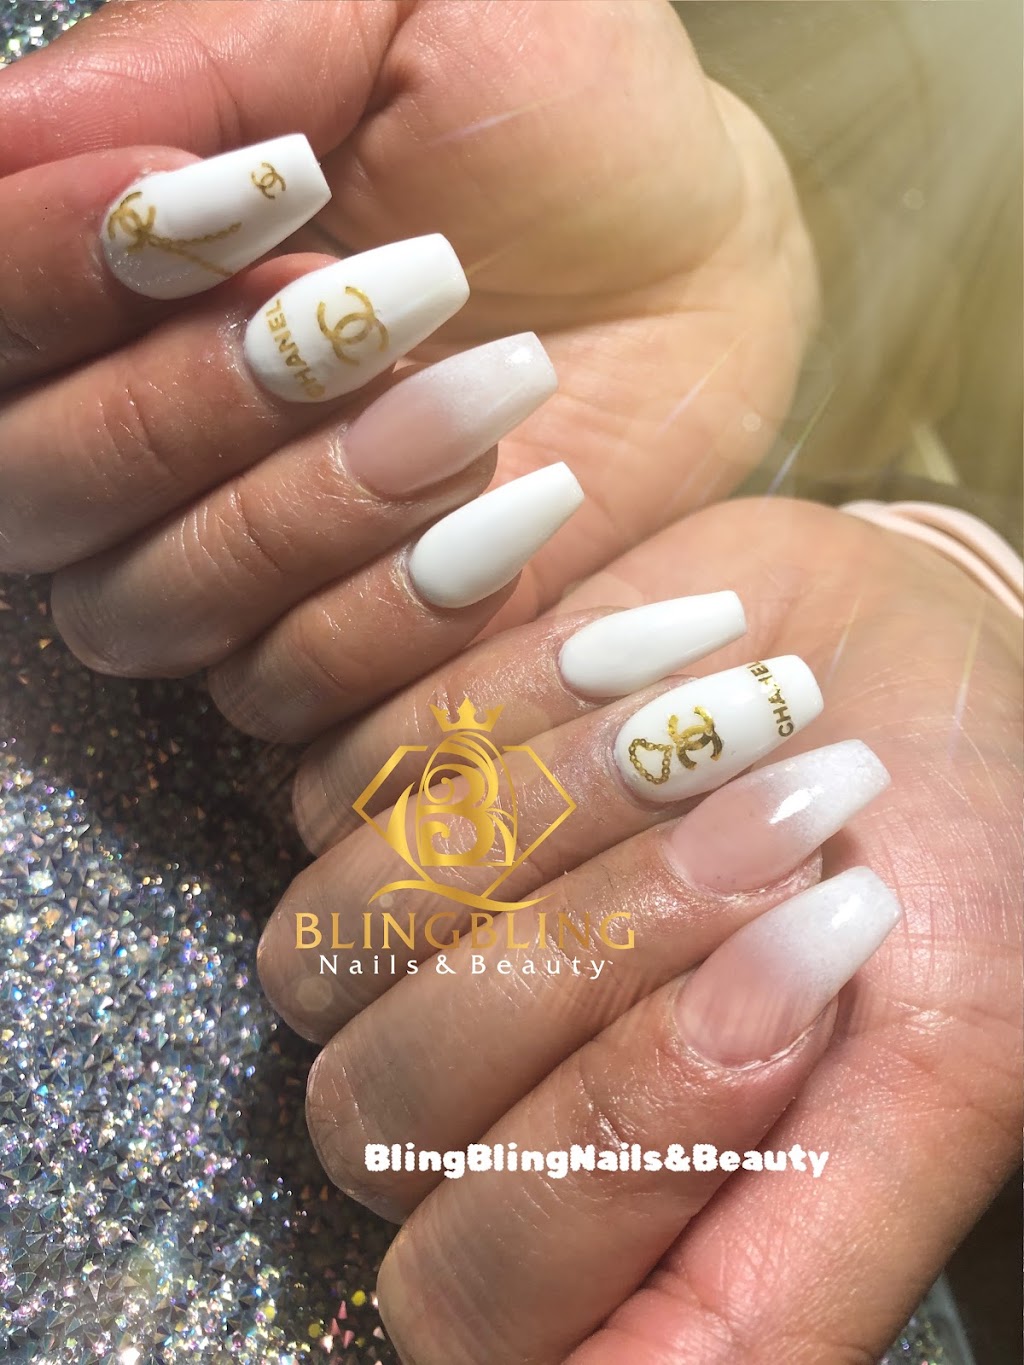 BlingBling Nails & Beauty | beauty salon | 33 Ruth St, St Albans VIC 3021, Australia | 0466885111 OR +61 466 885 111